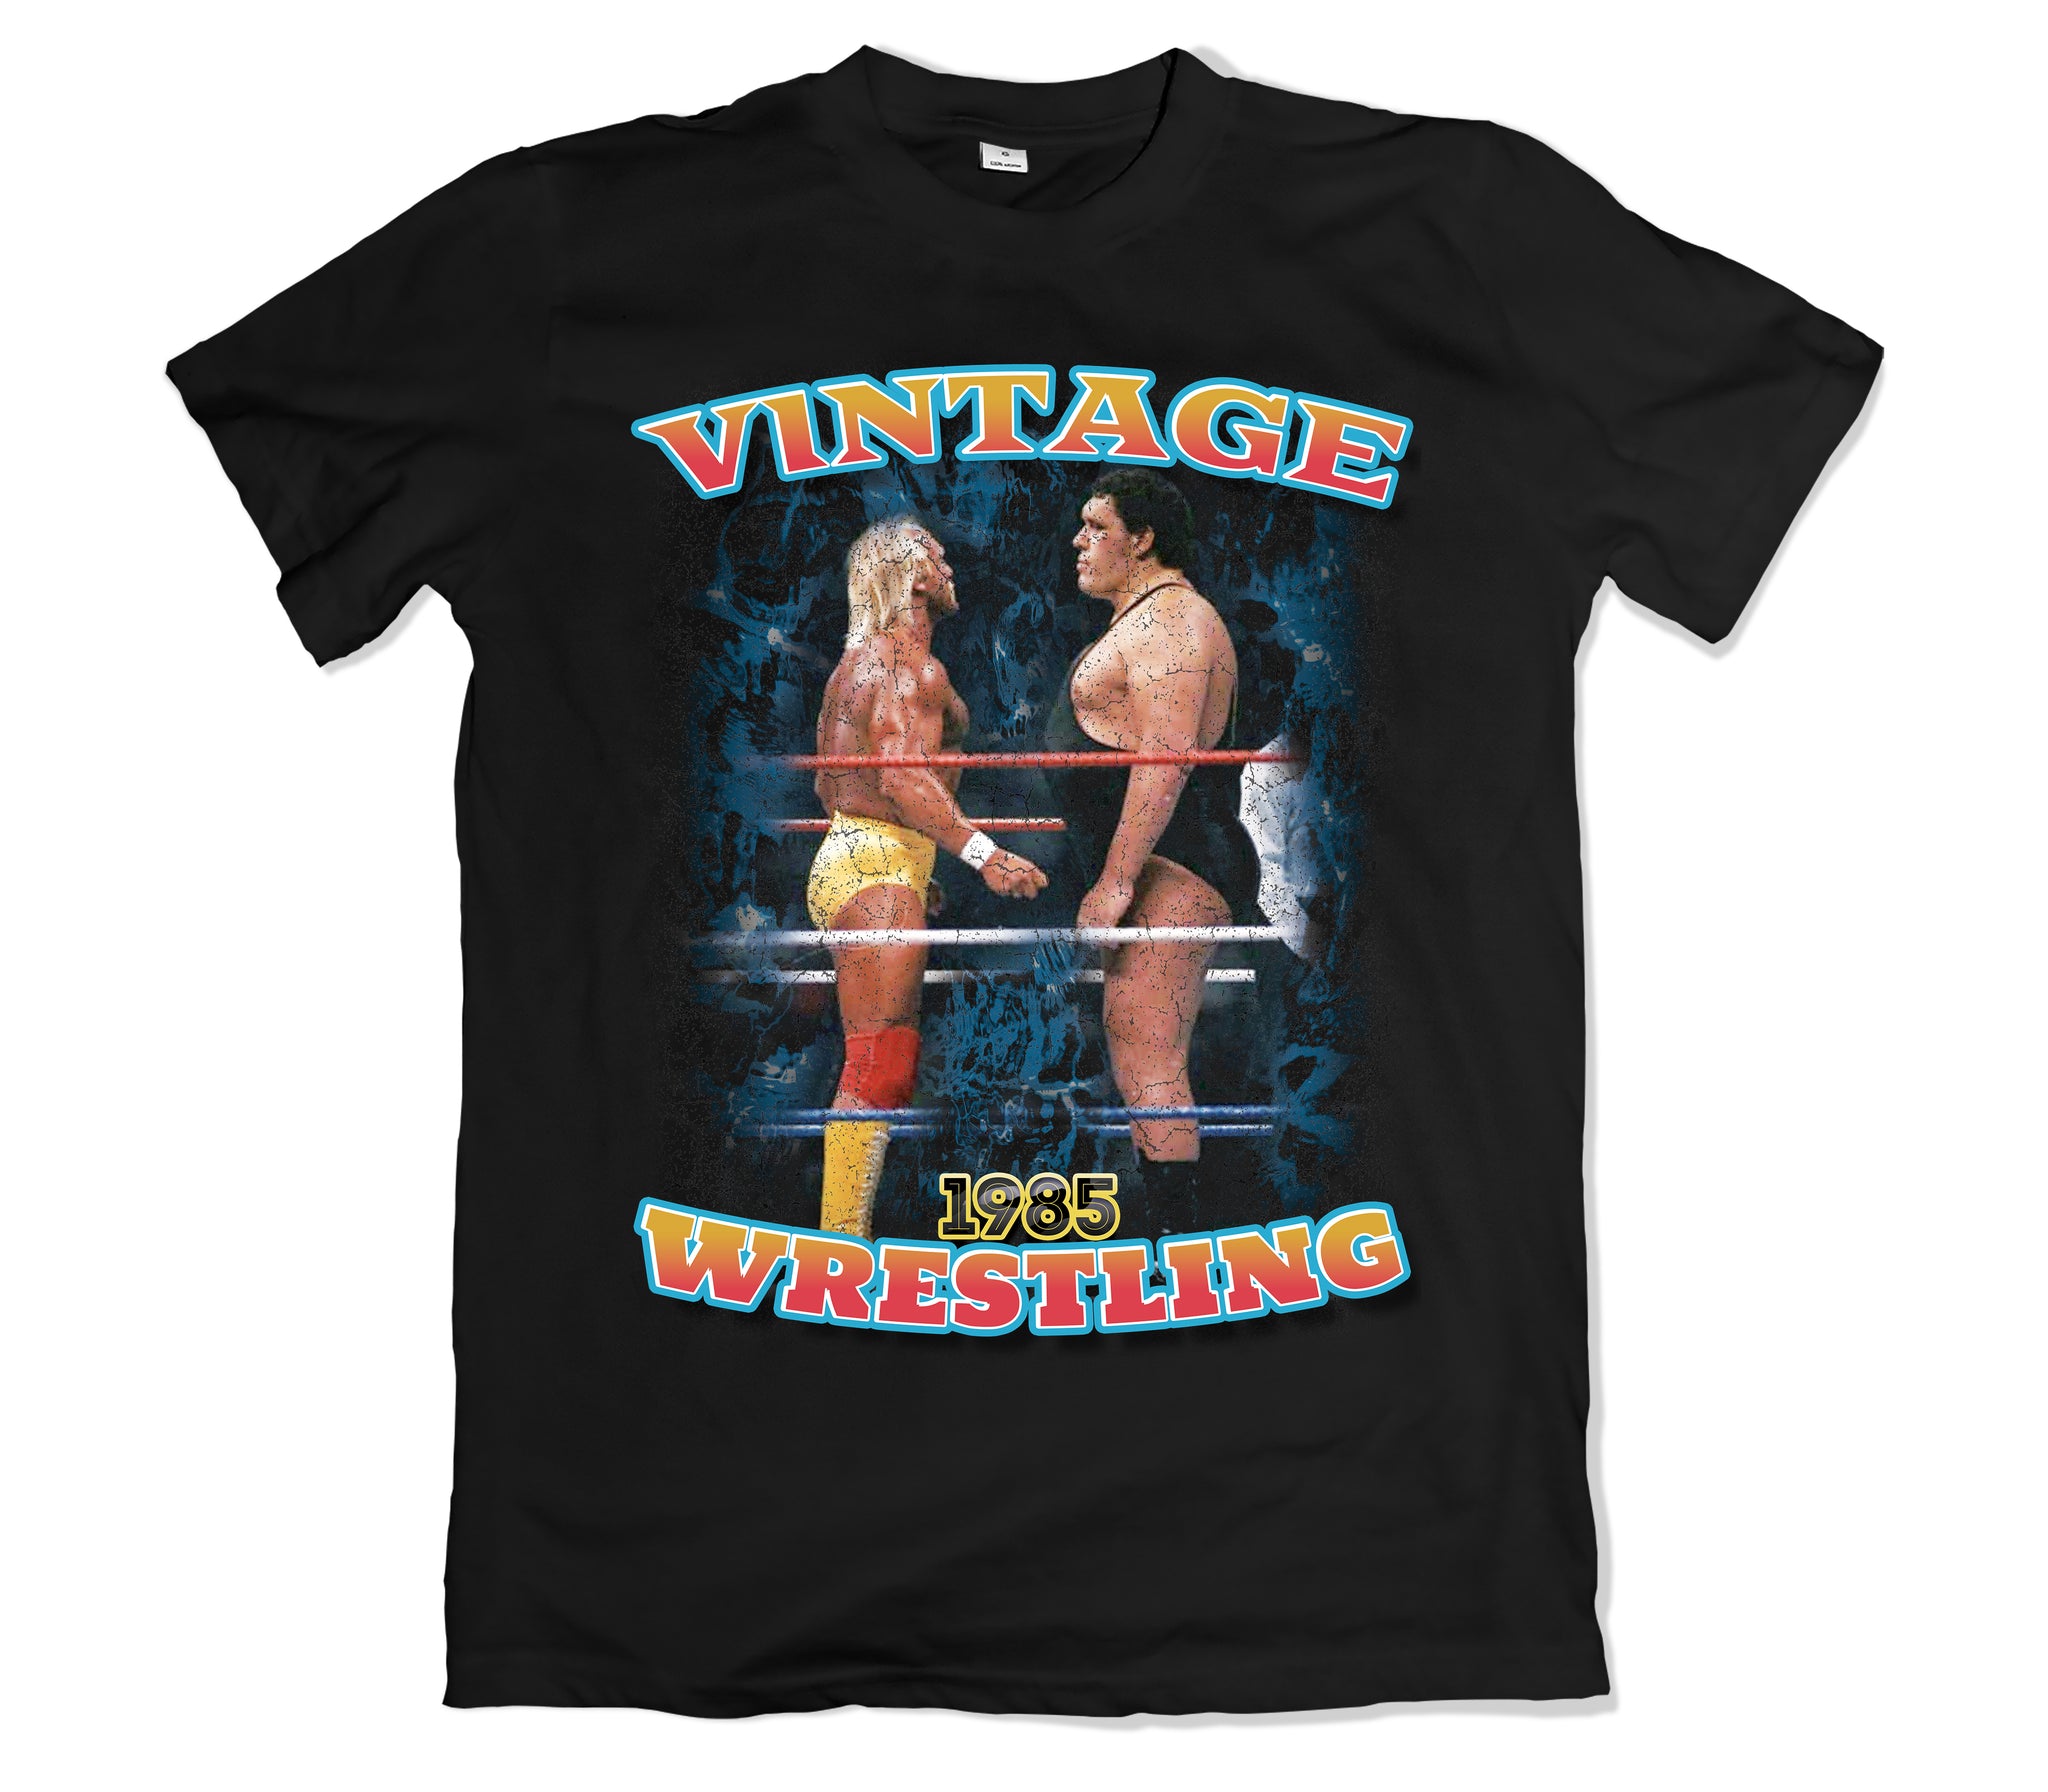 Vintage Wrestling Tee shirt